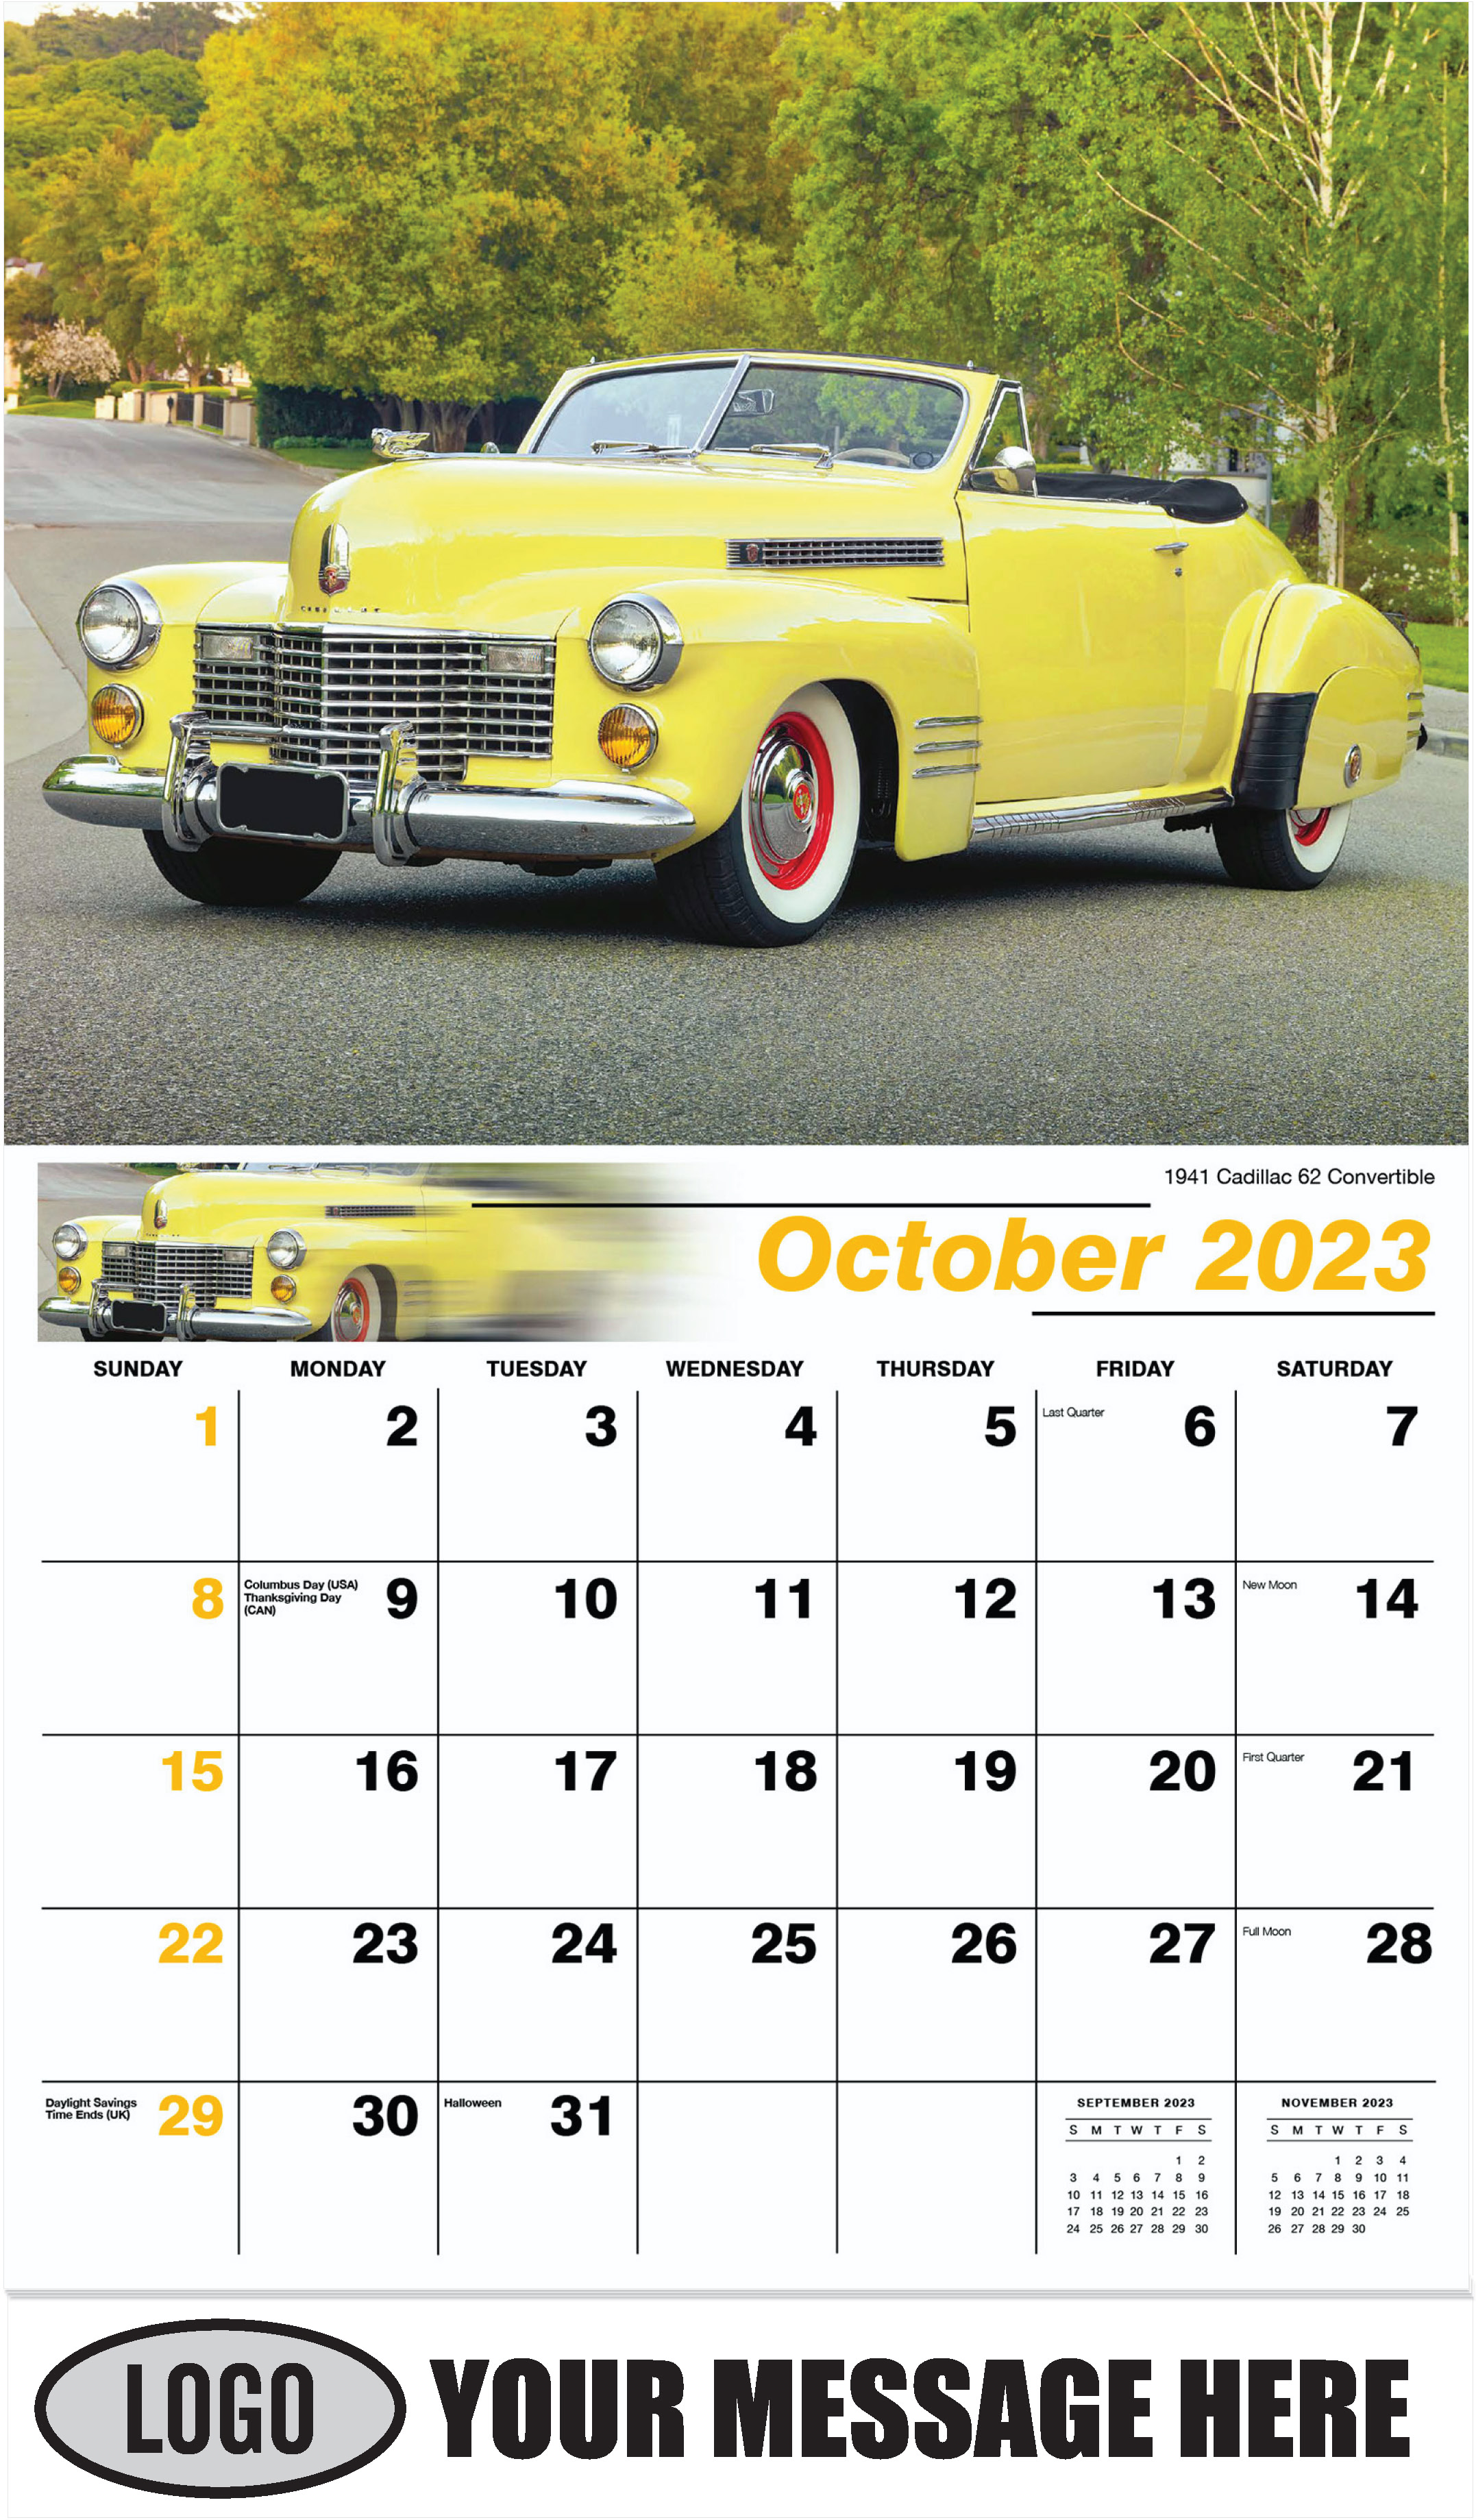 1941 Cadillac 62 Convertible - October - GM Classics 2023 Promotional Calendar